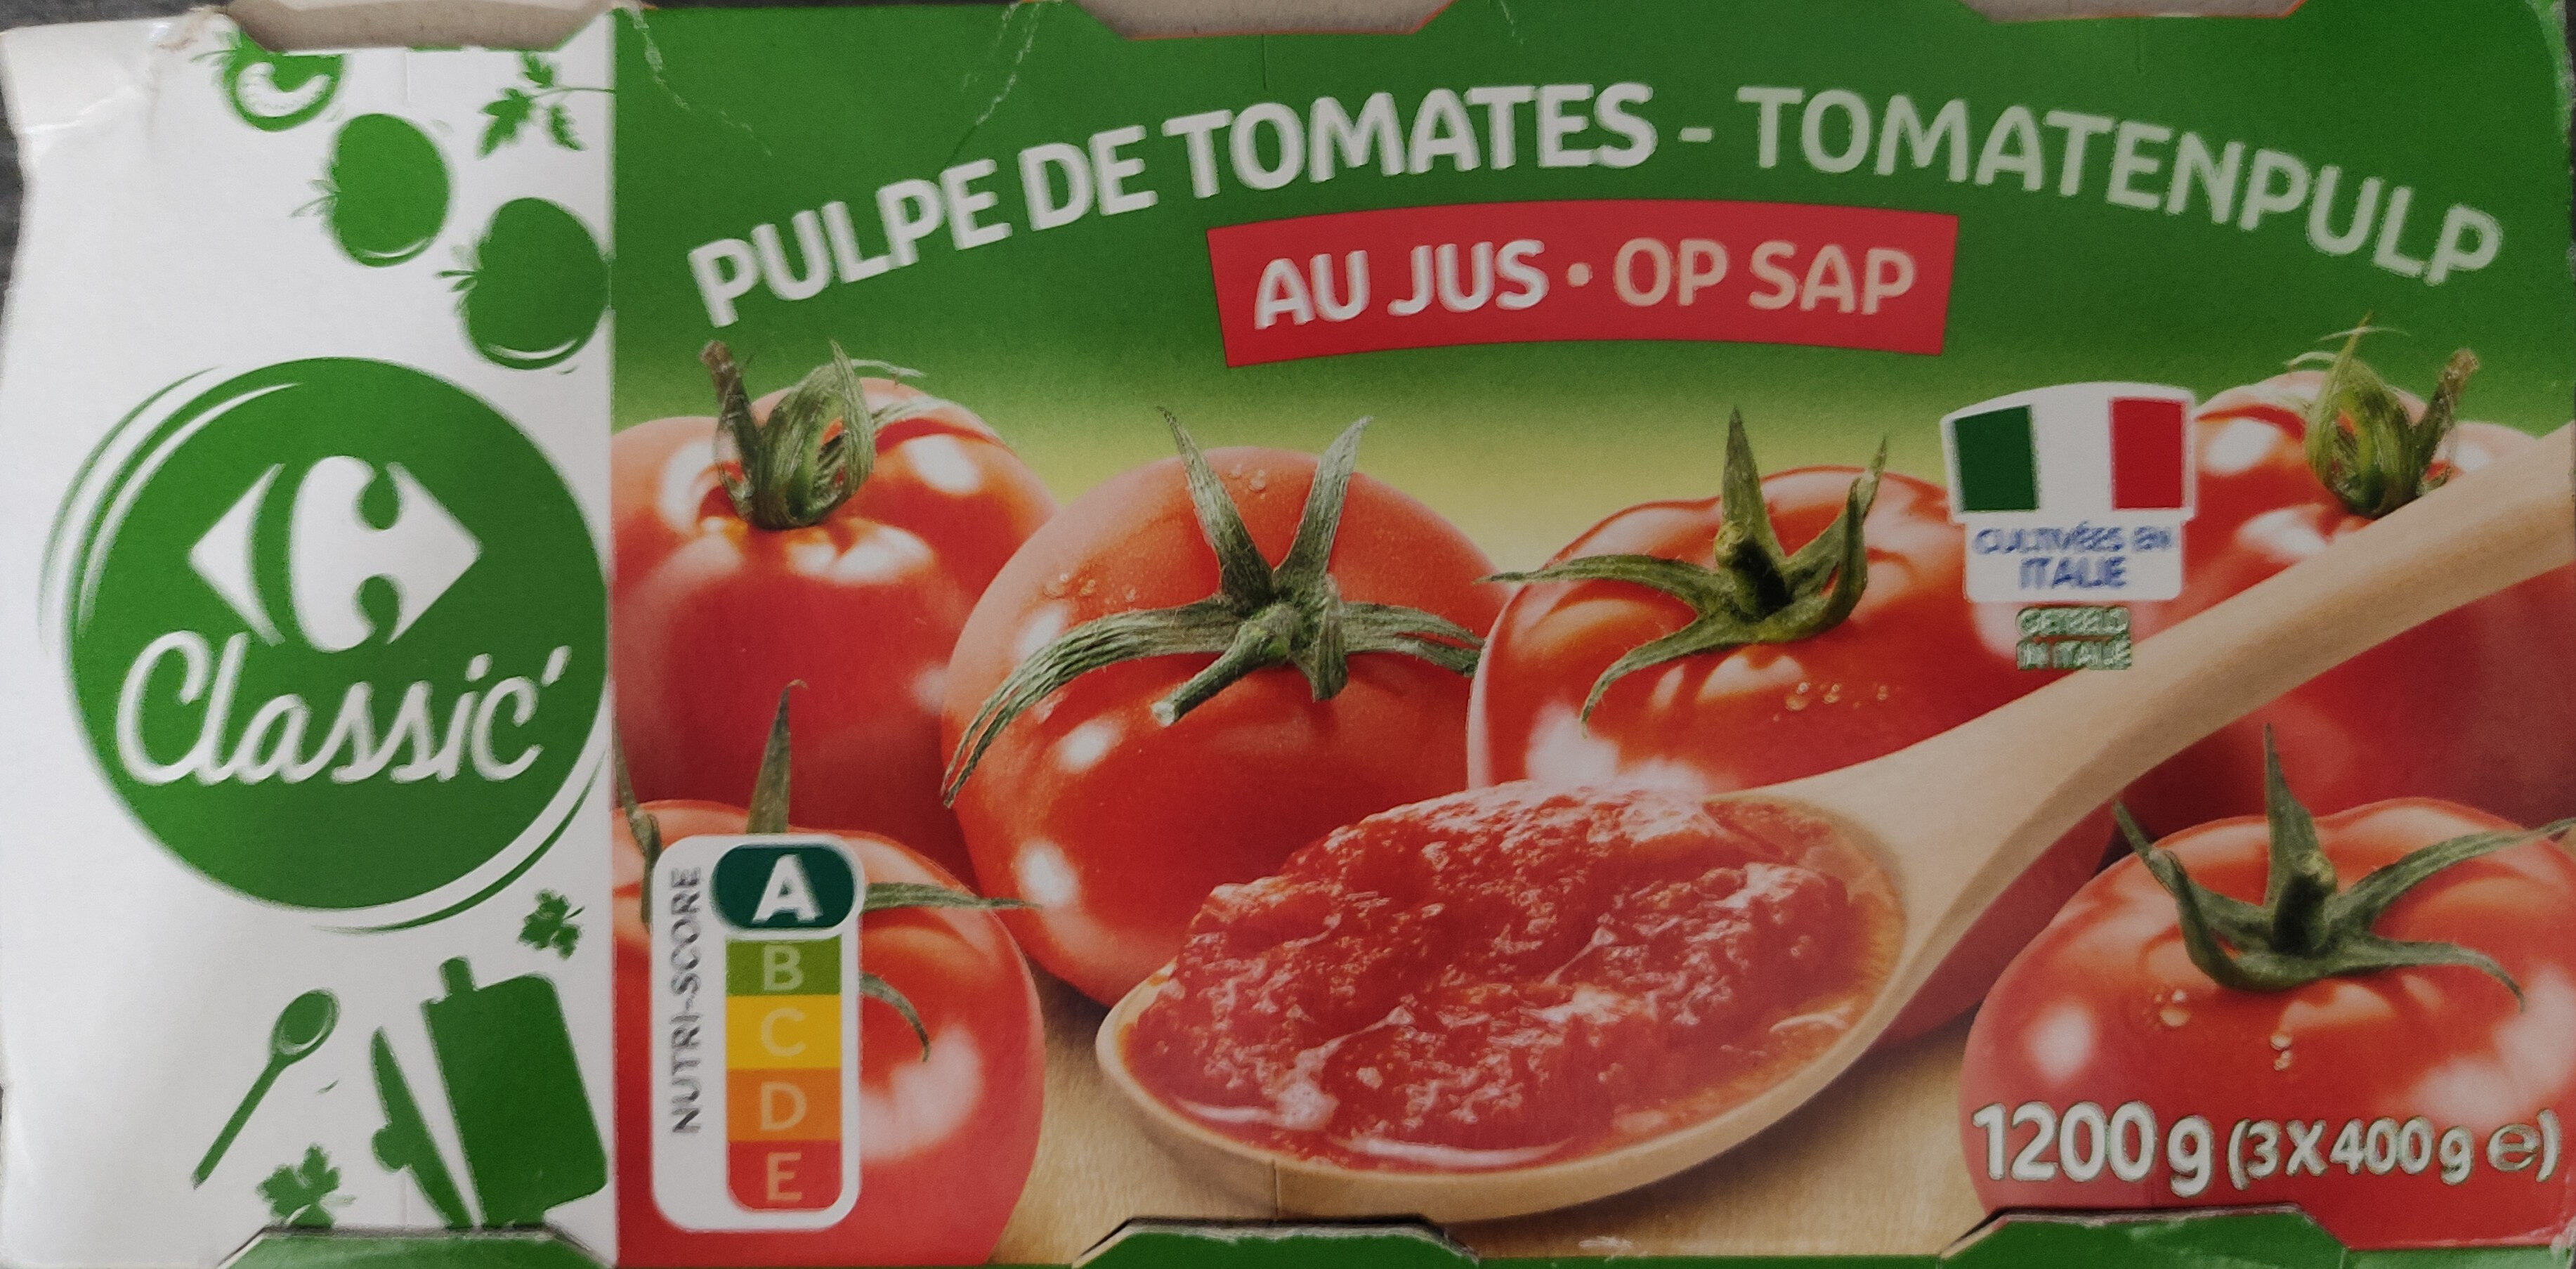 Pulpe de tomates nature - Product - fr